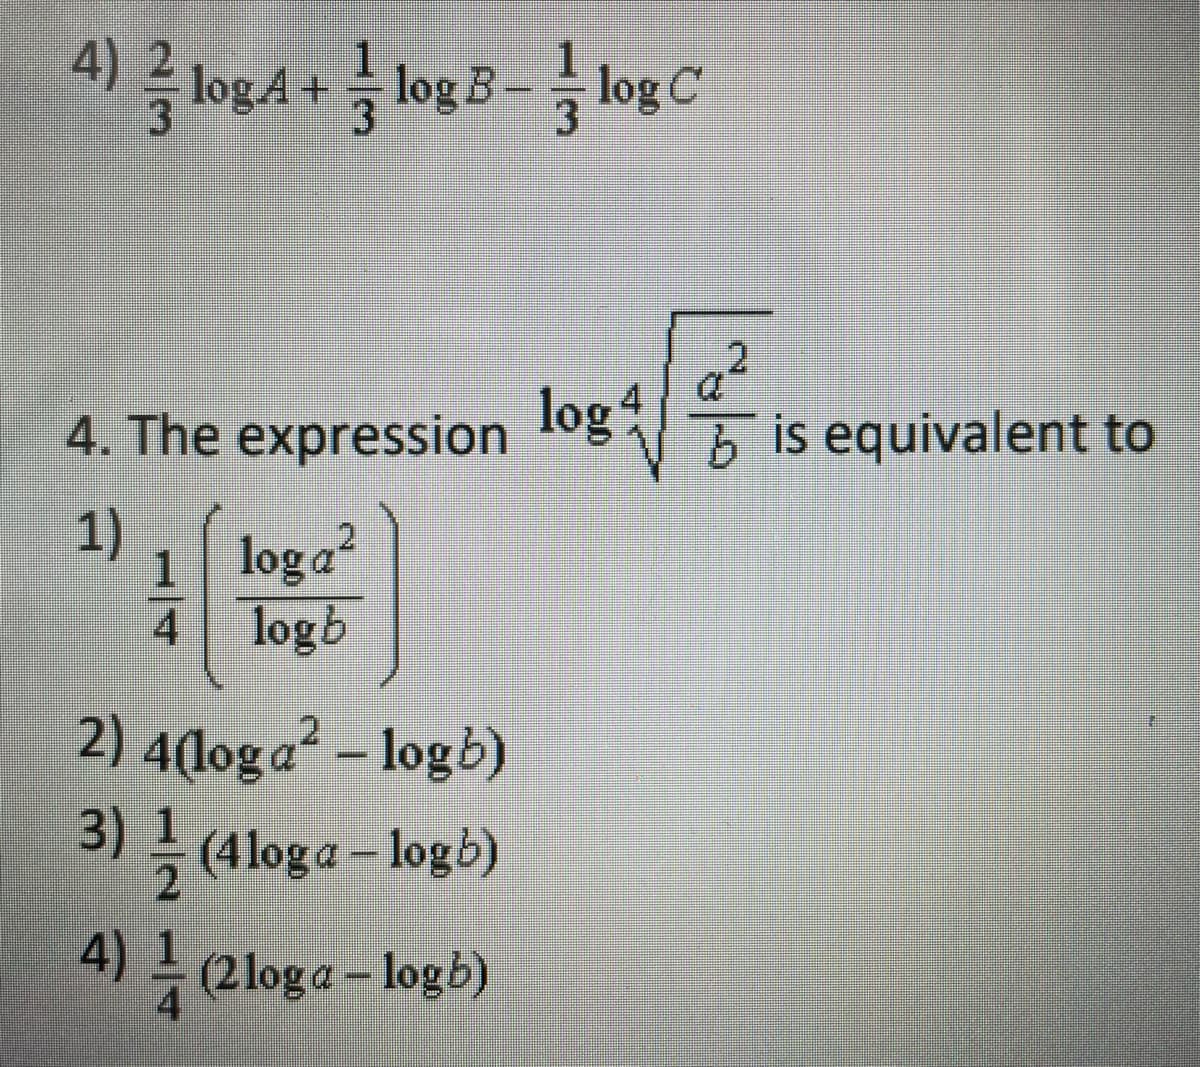 * logA + log B- log C
.2
4. The expression
log
is equivalent to
1)
1 loga
4 logb
2) 4(loga² – logb)
3) (Aloga - logb)
4) eloga - logb)
